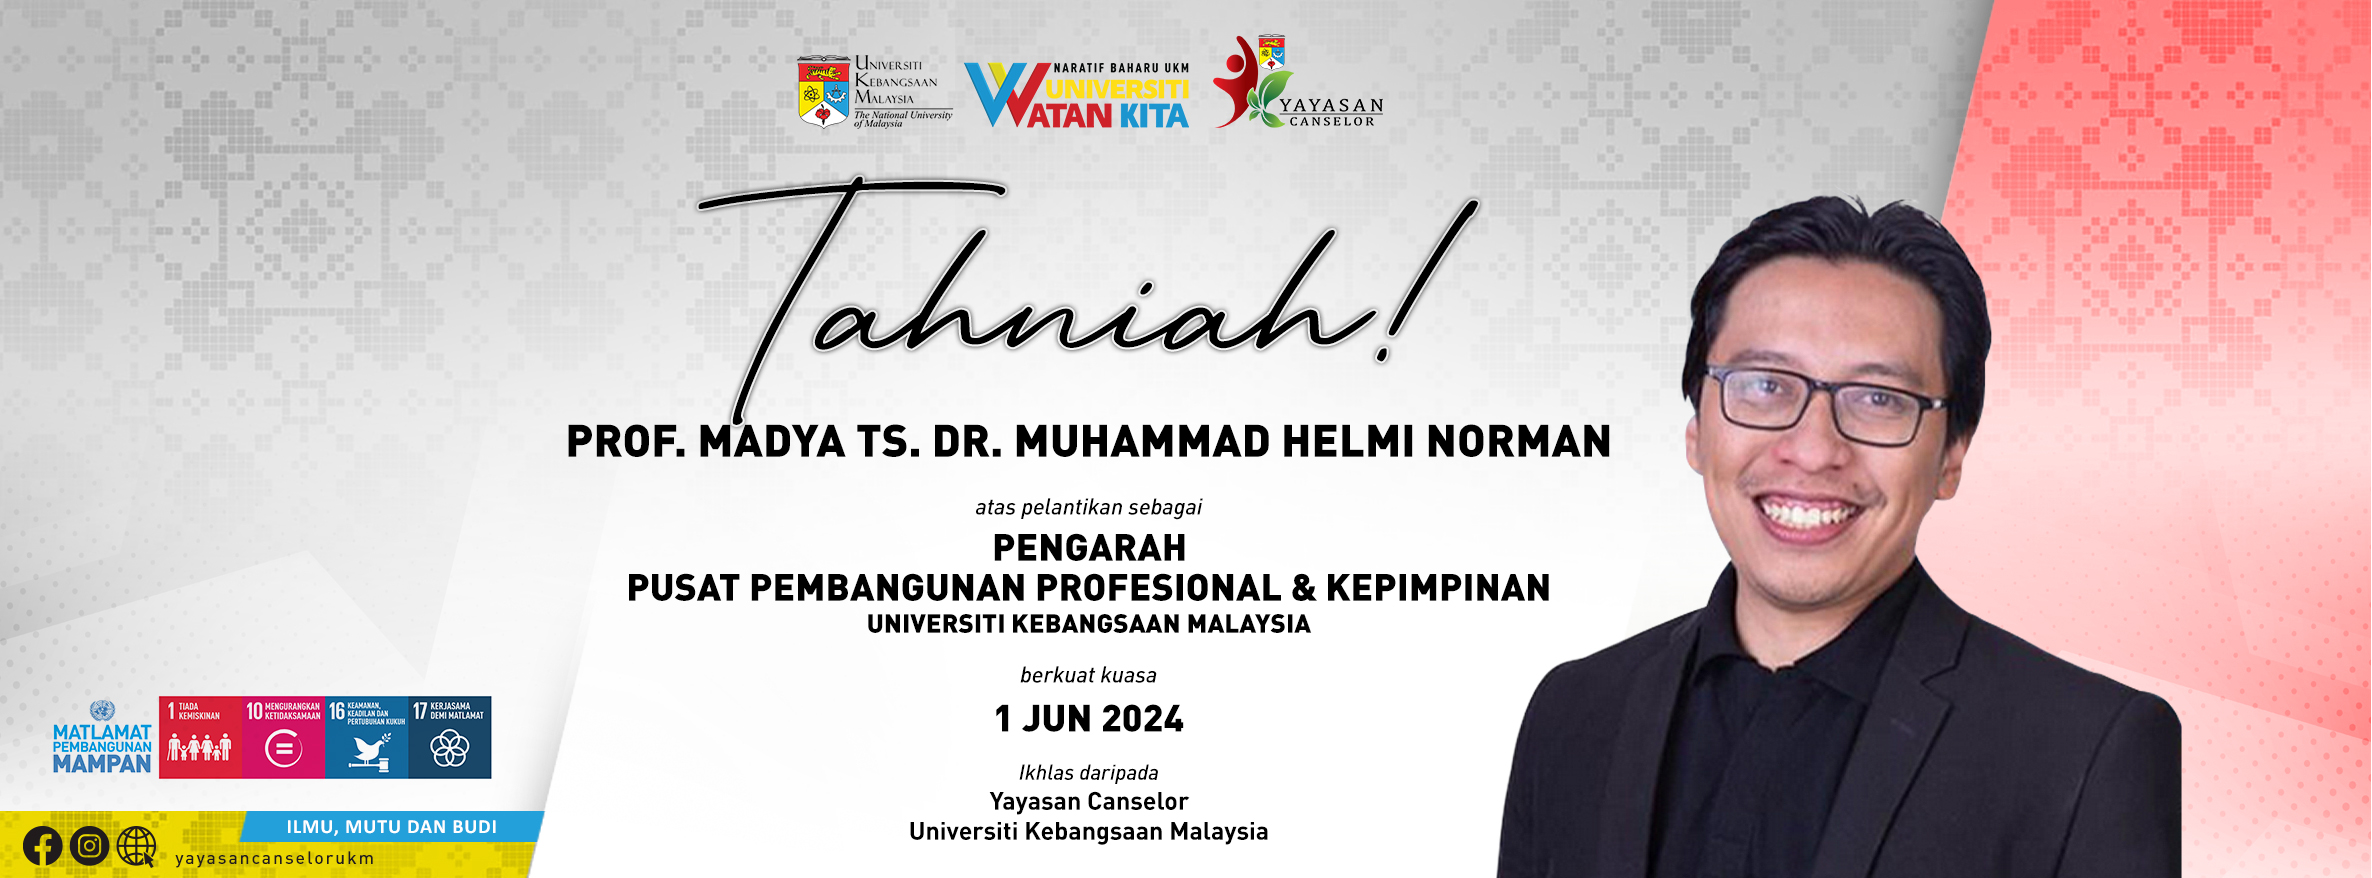 BANNER TAHNIAH-Prof. Madya Ts. Dr. Muhammad Helmi Norman